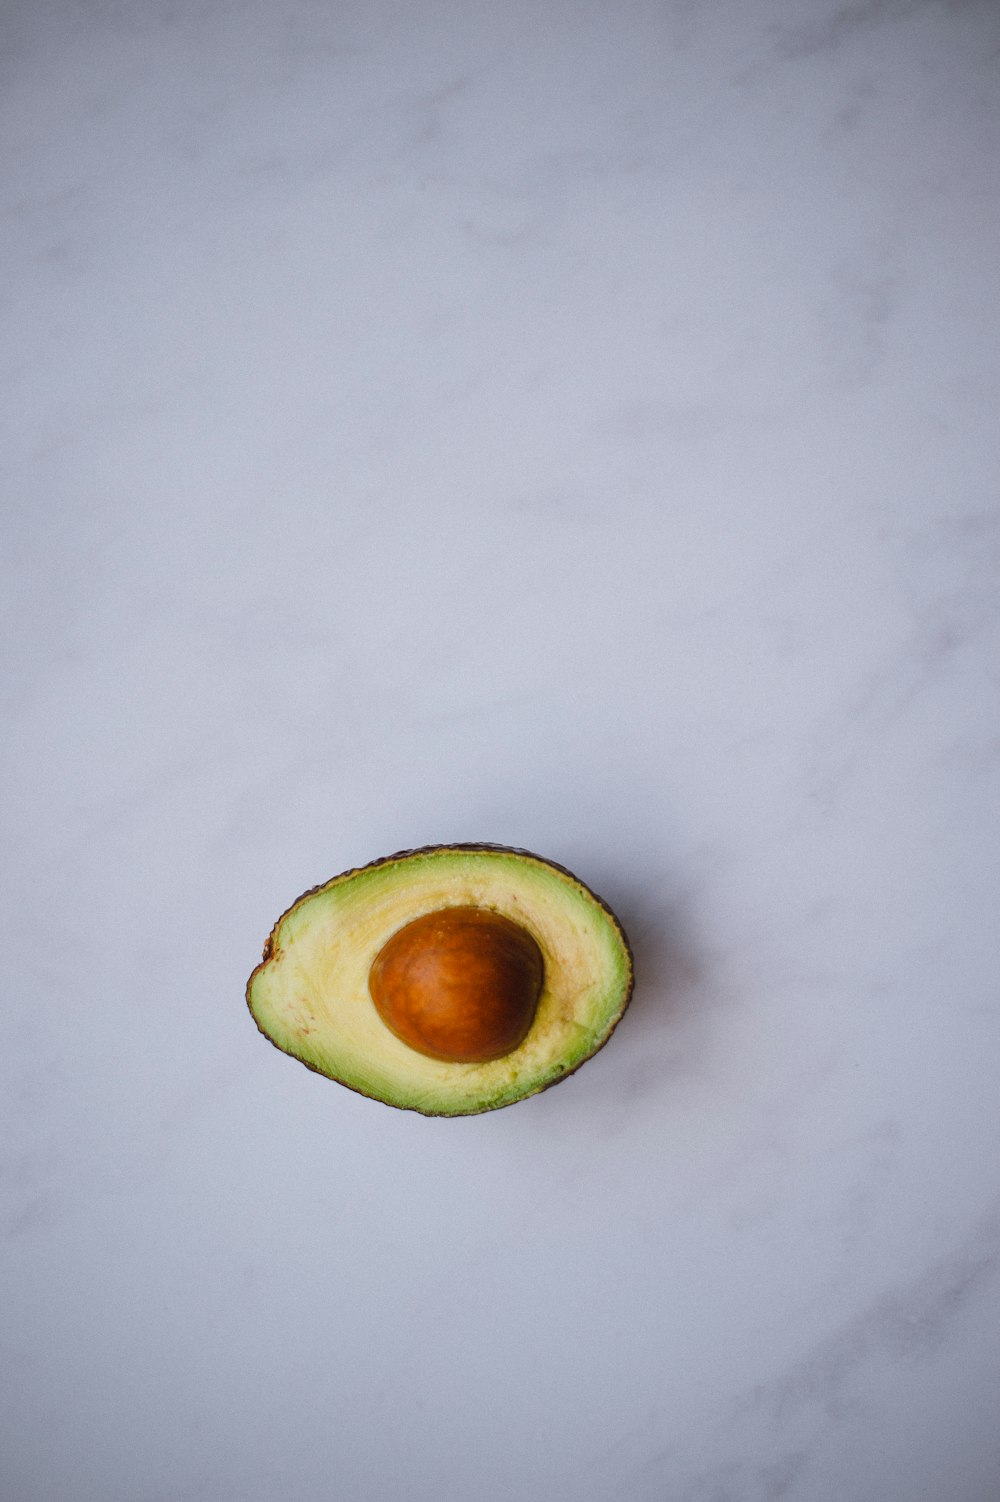 photo of avocado on white surface